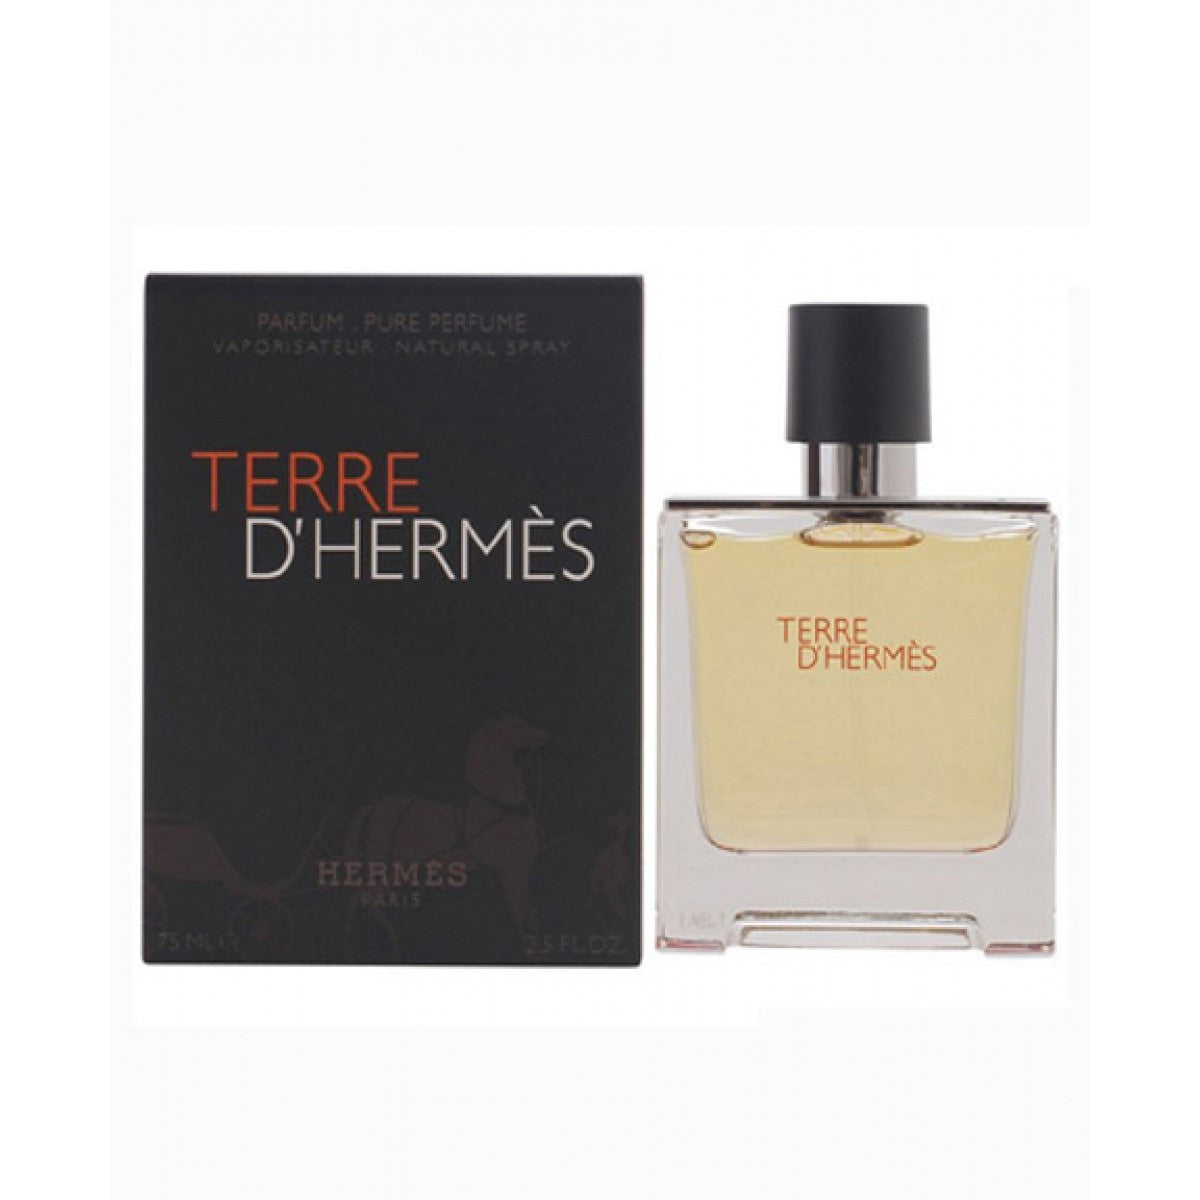 Terre D'Hermes Parfum Pure Perfume 75 ml - RossoLacca